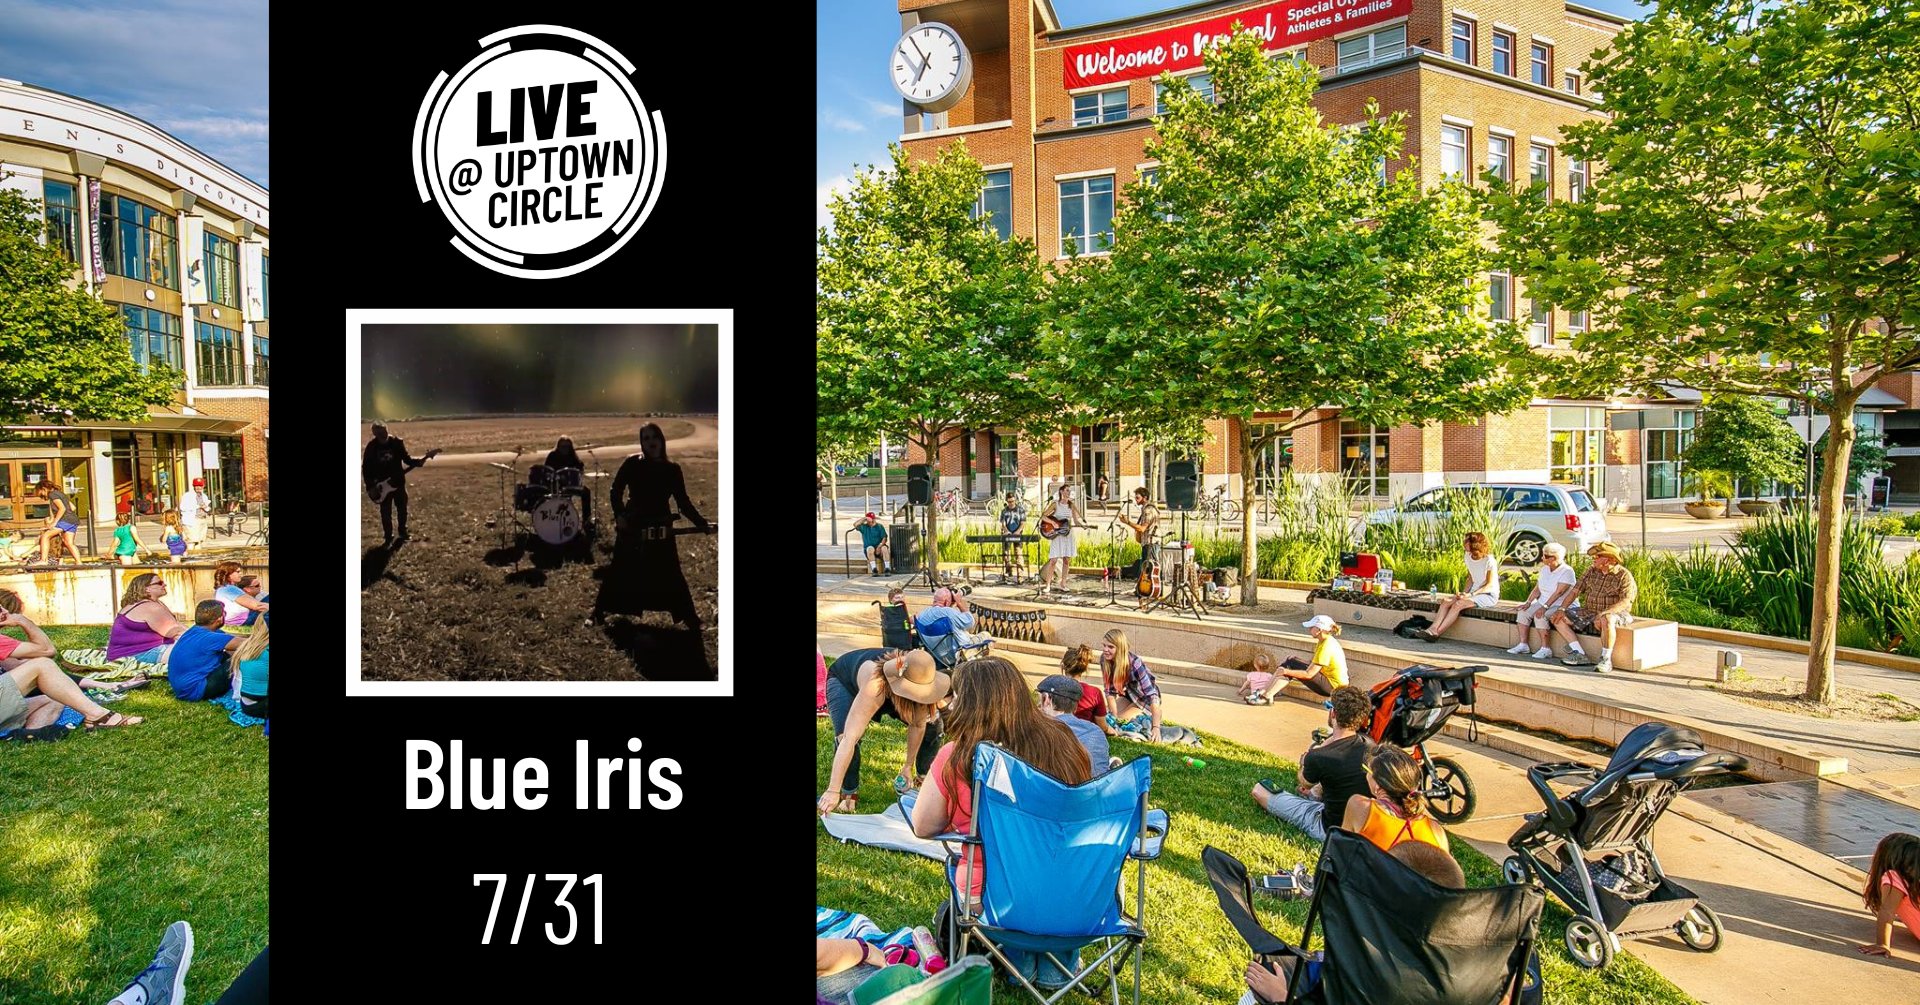 Normal LIVE presents Blue Iris @ Uptown Circle